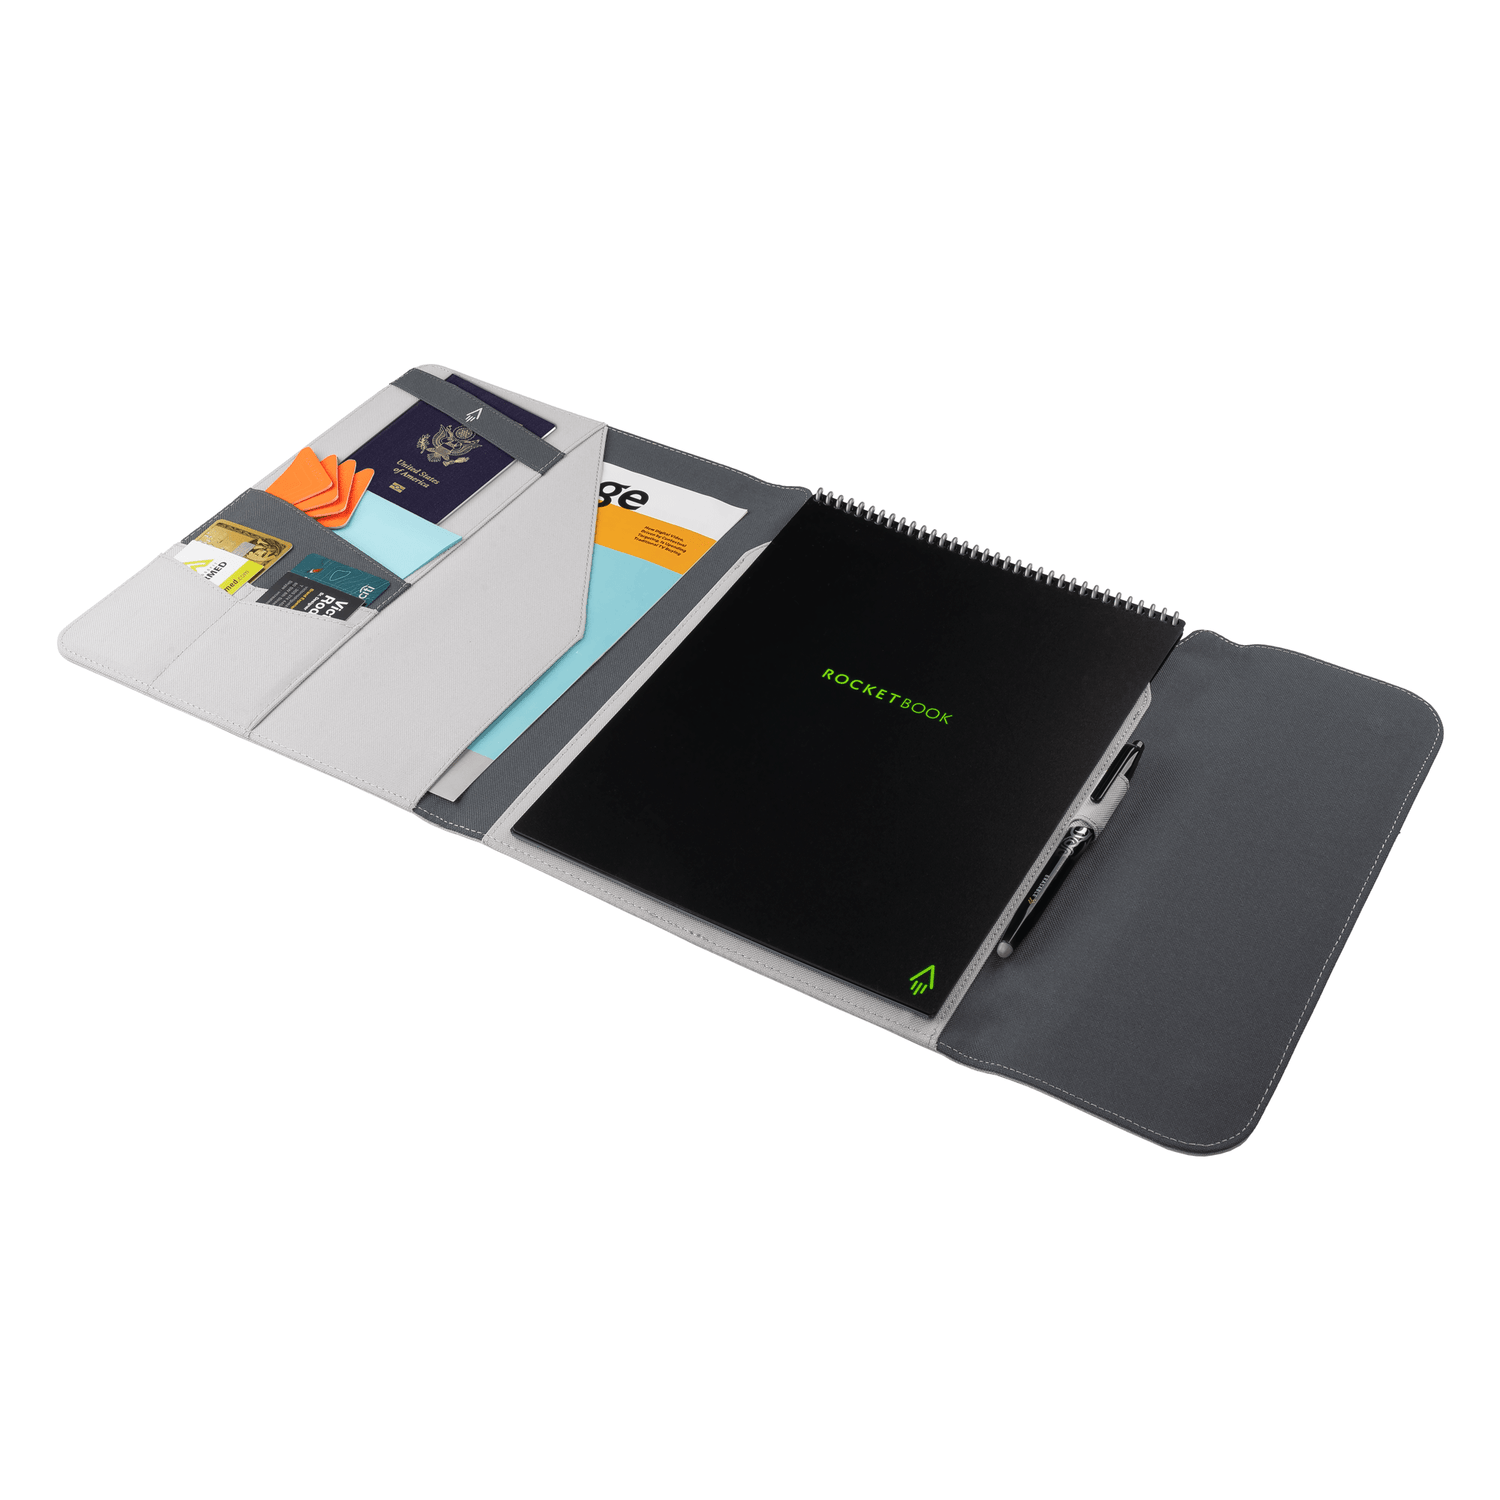 Rocketbook Flip Smart Reusable Letter Size Notepad 8 12 x 11 1